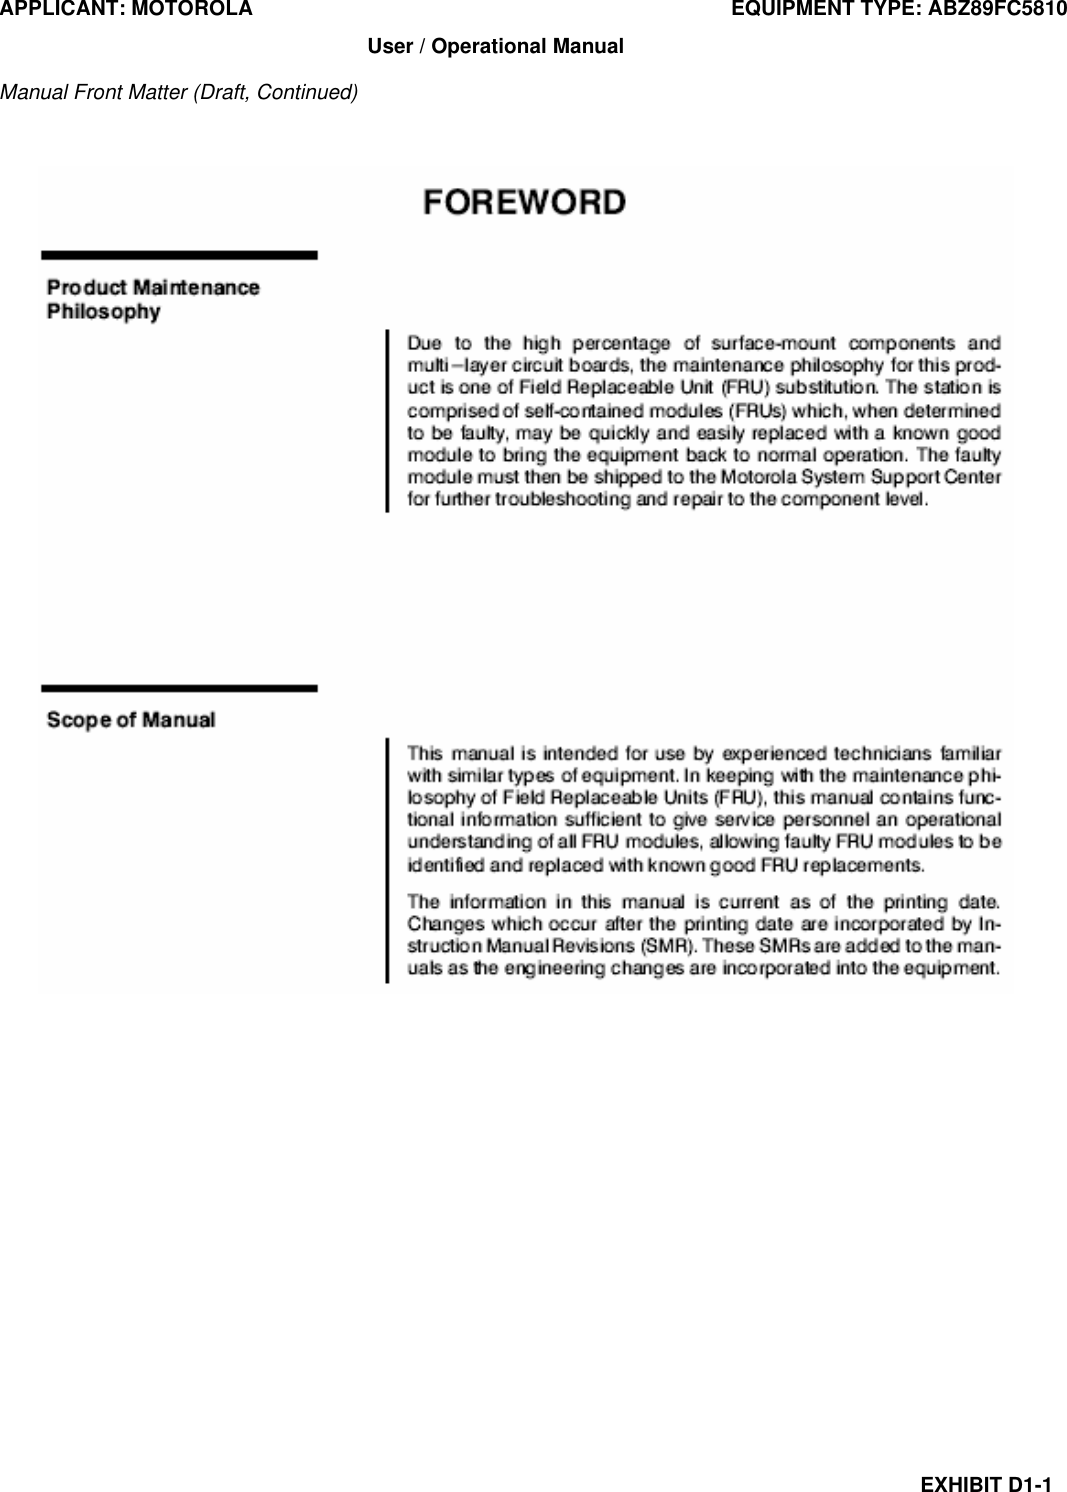 APPLICANT: MOTOROLA EQUIPMENT TYPE: ABZ89FC5810 EXHIBIT D1-1 User / Operational Manual  Manual Front Matter (Draft, Continued) 